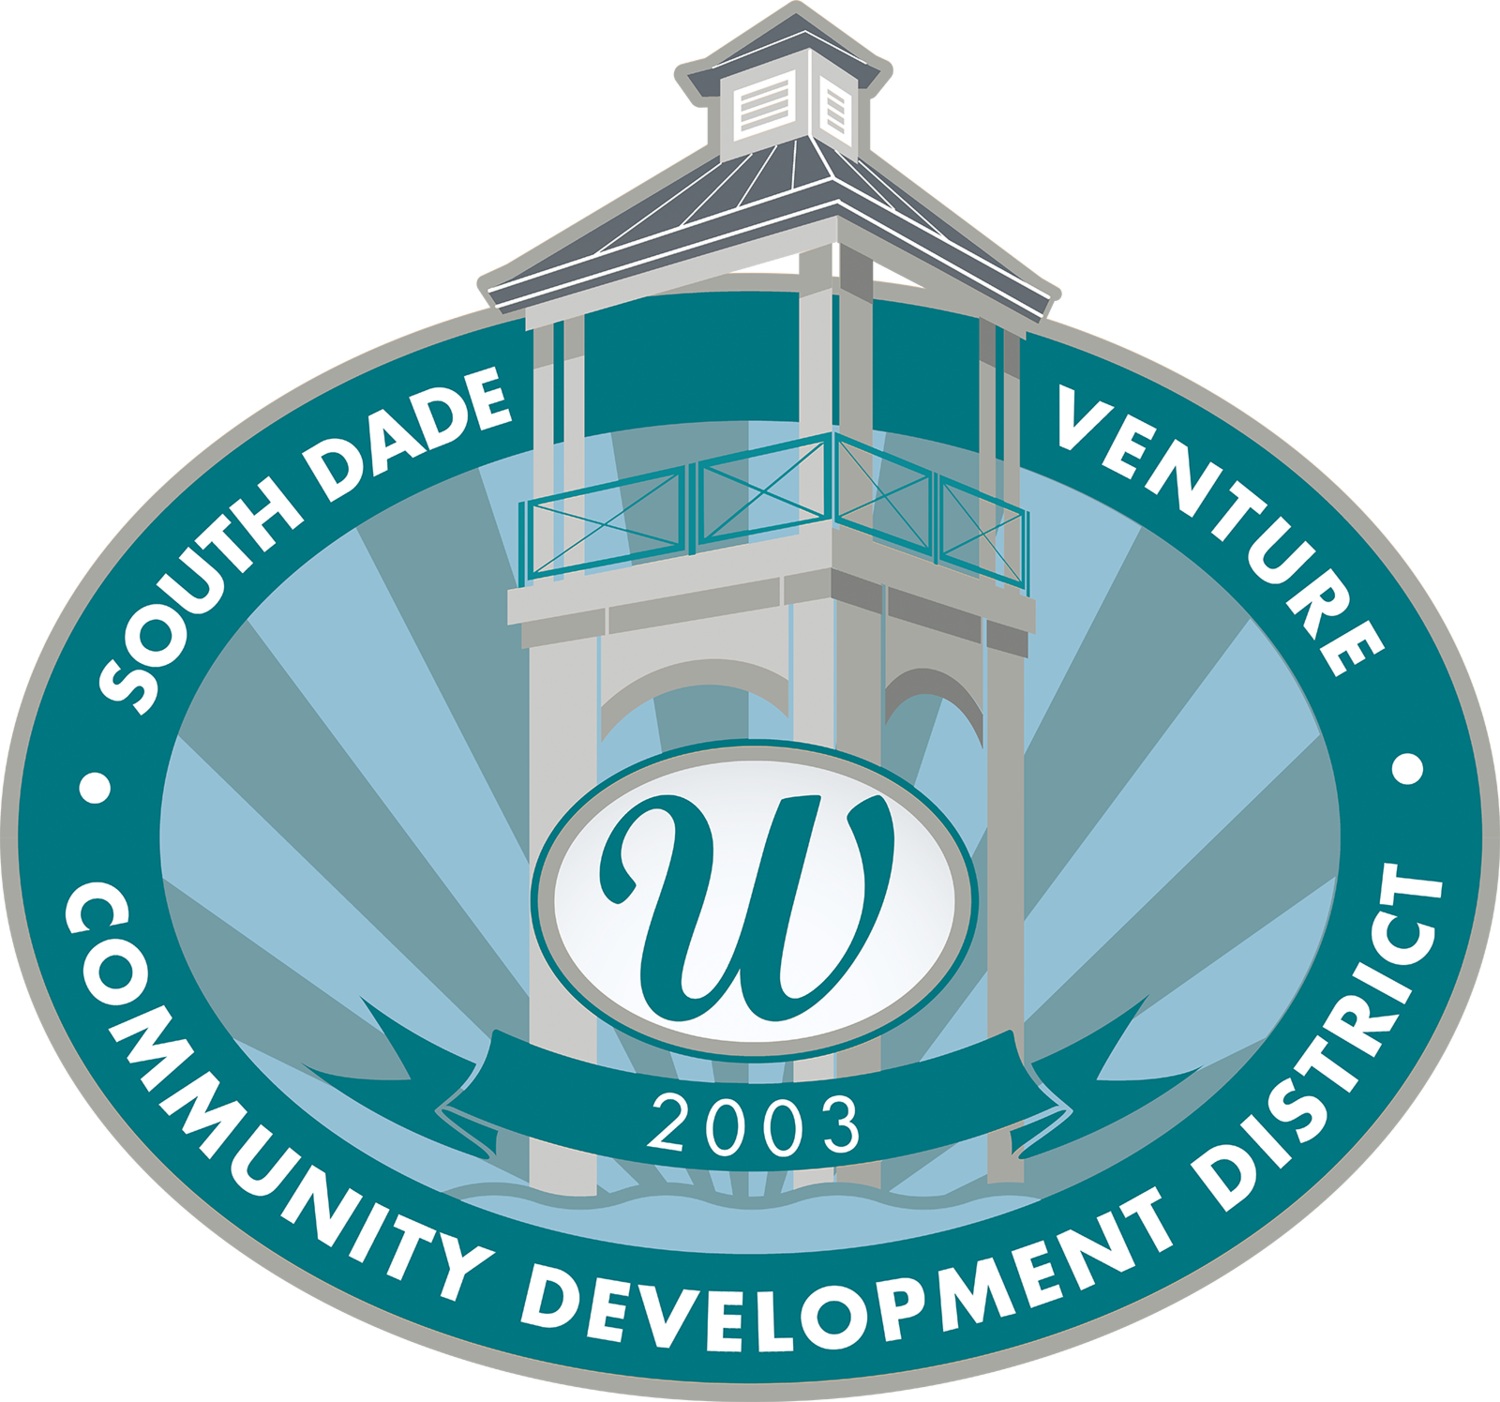 Southdade Community Development District